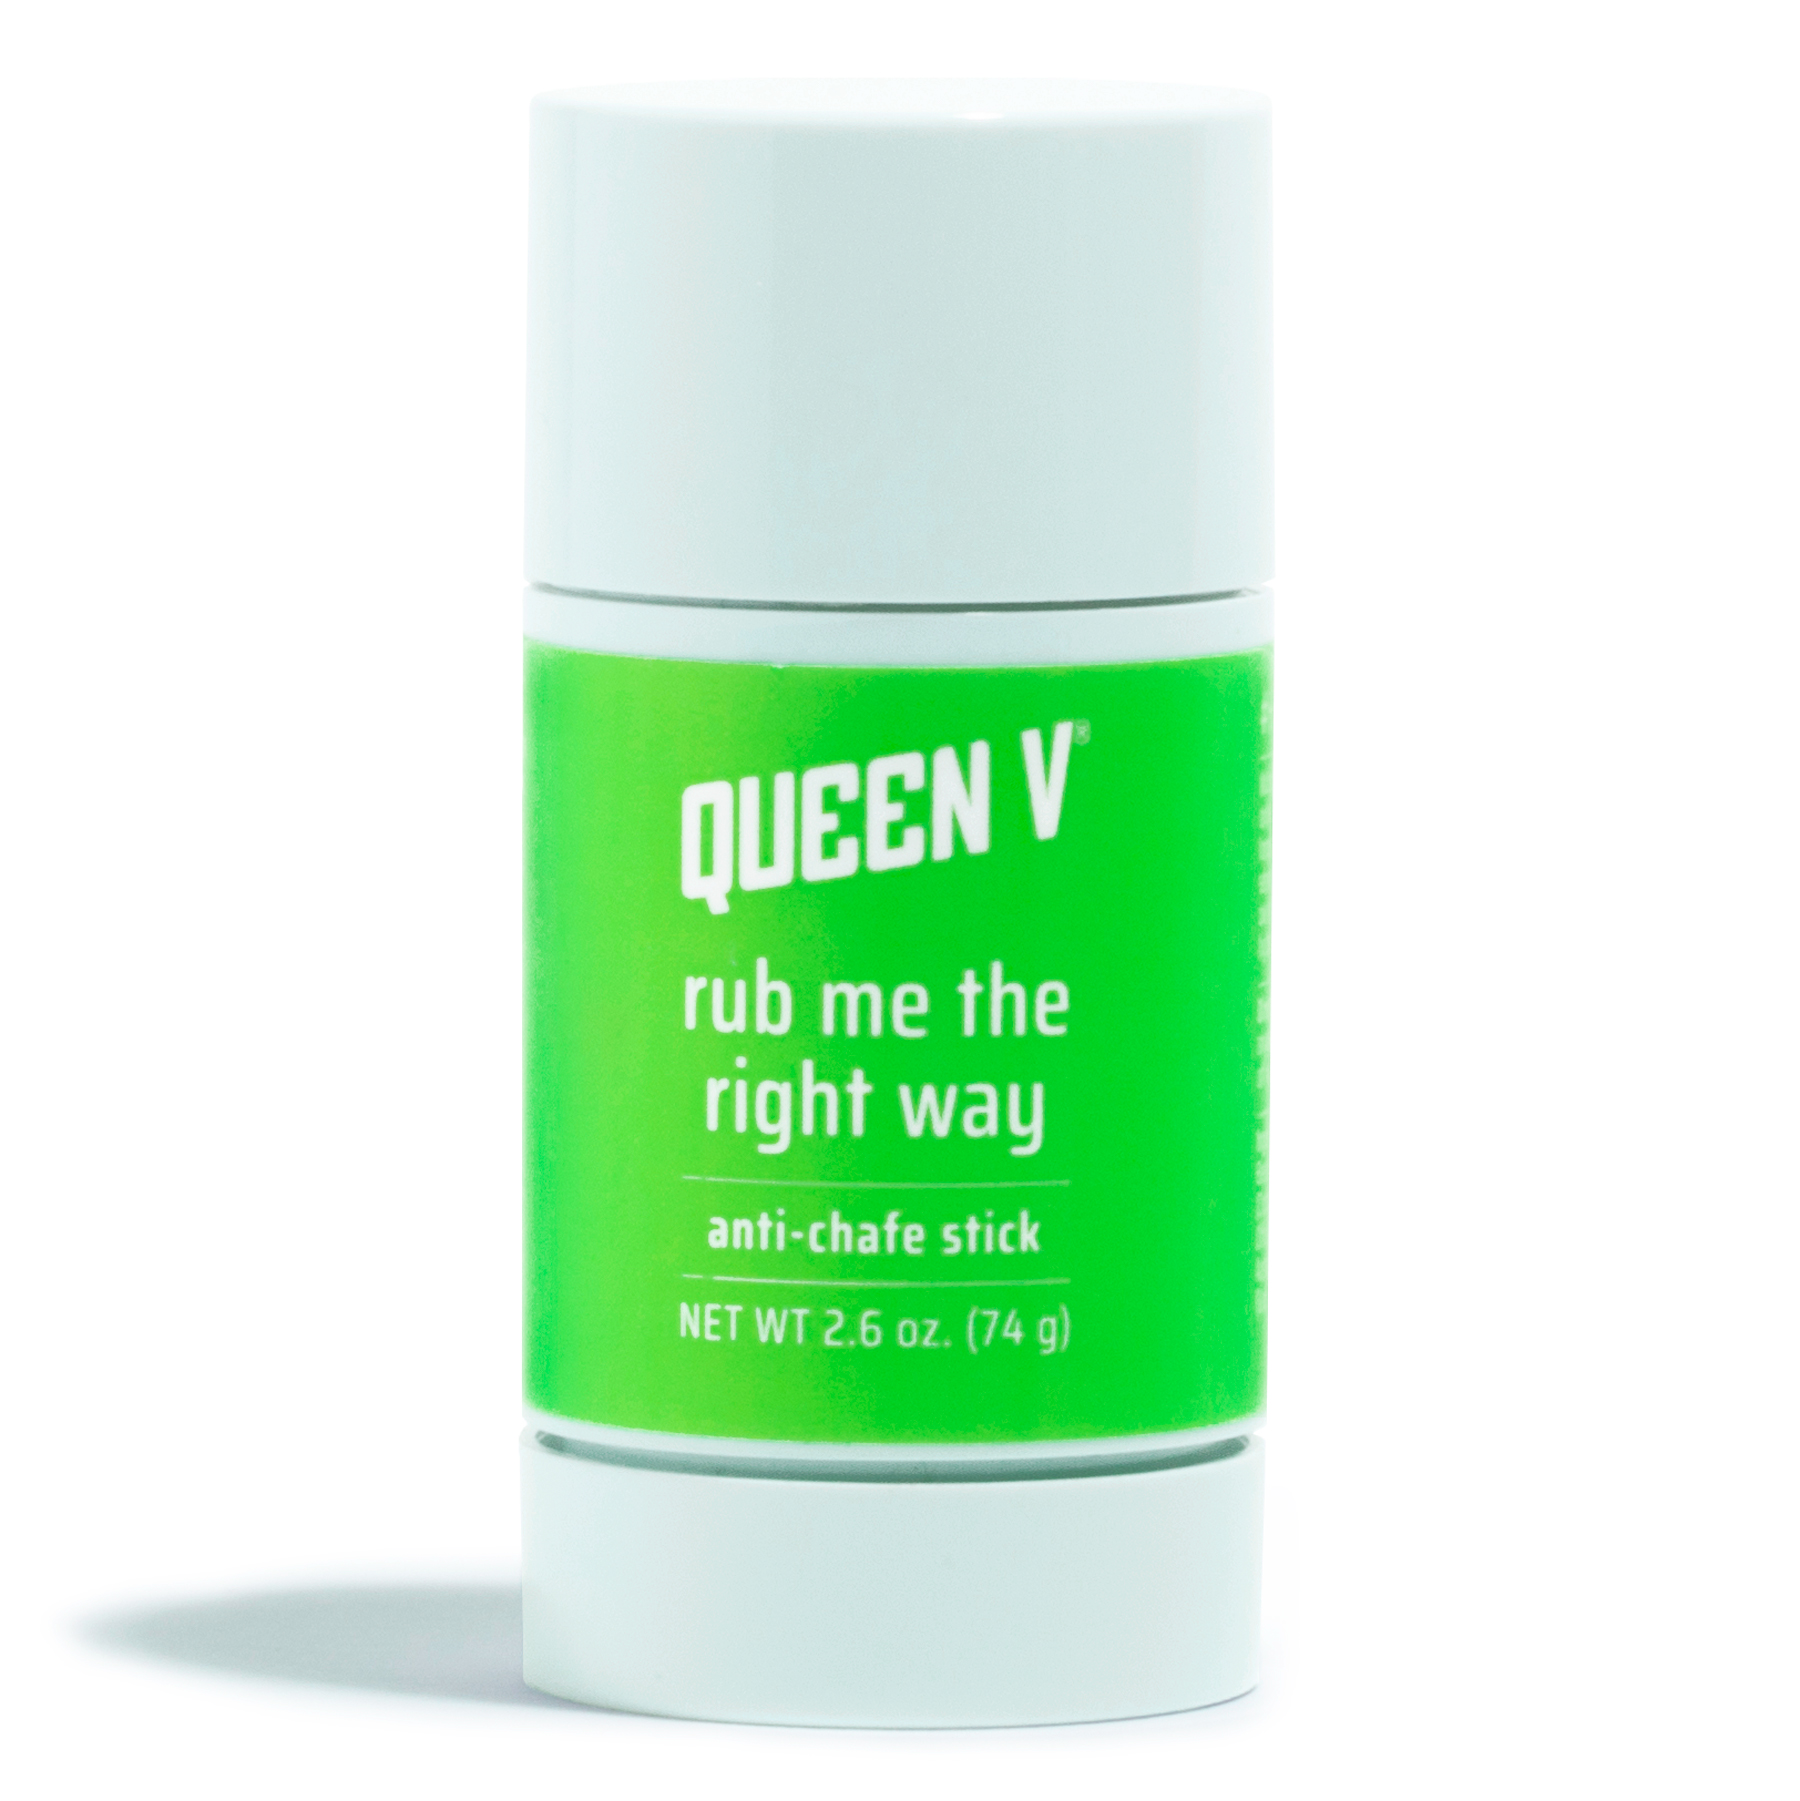 Queen V Rub Me the Right Way Anti-Chafe Stick pH-Balanced 2.6 Oz - image 1 of 3